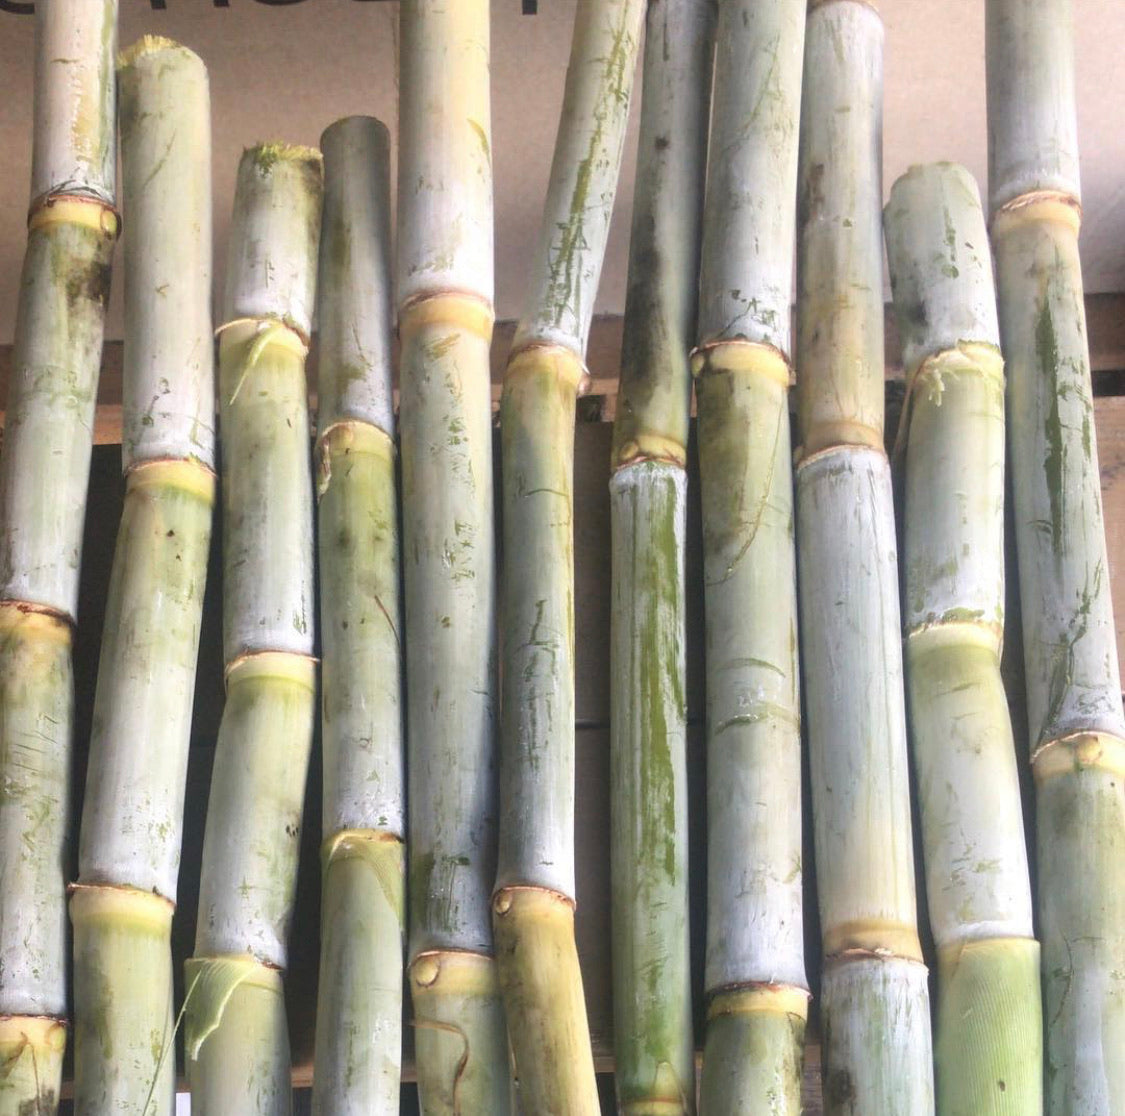 Sugarcane, Louisiana Green